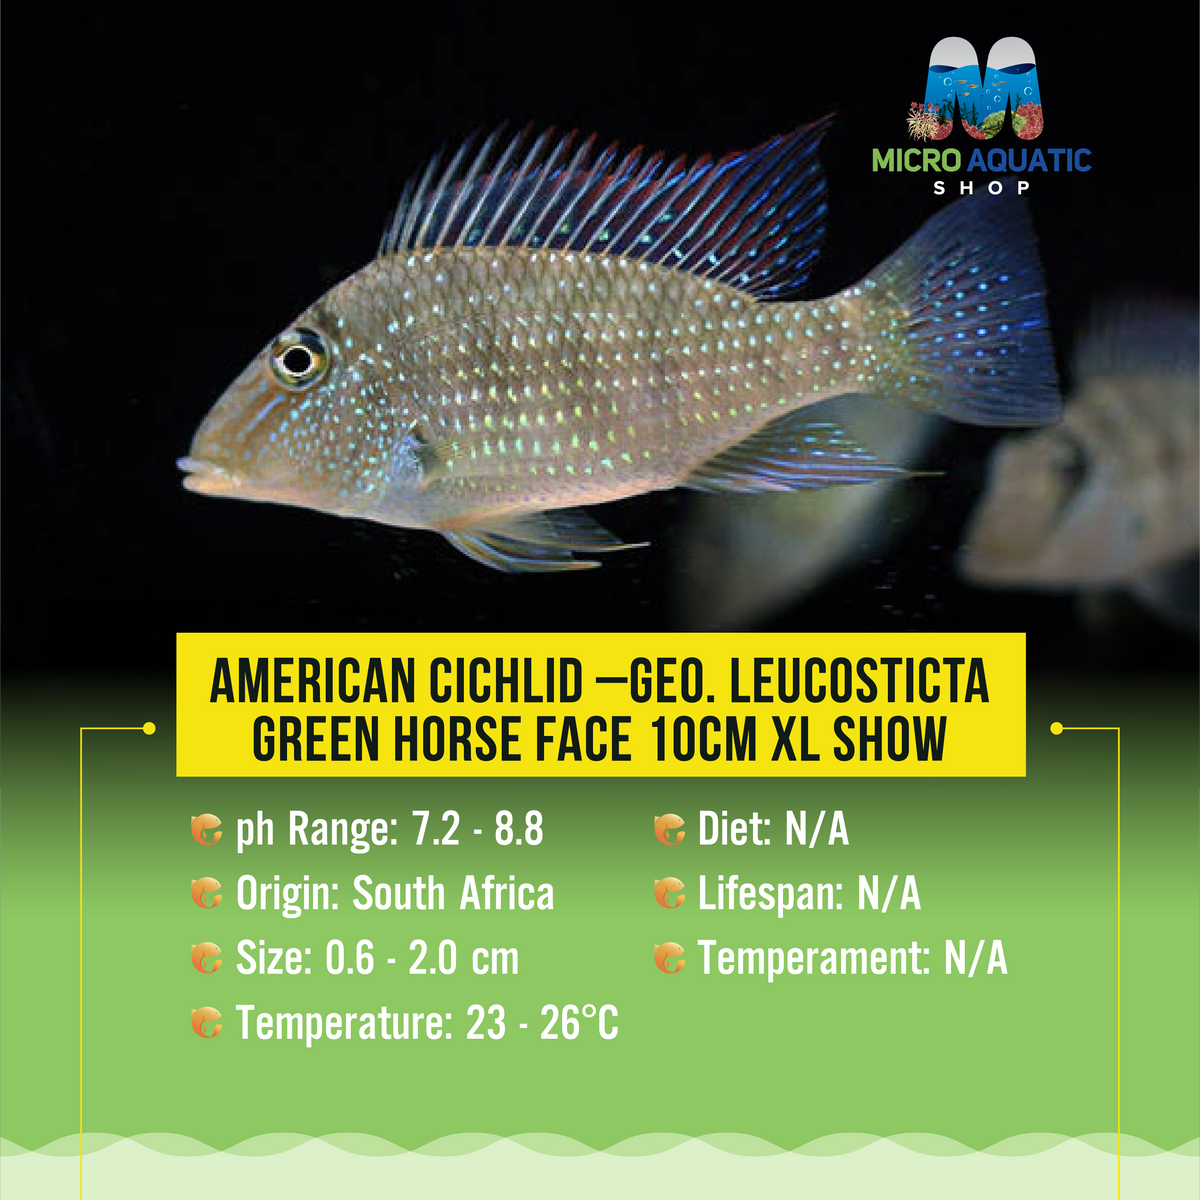 American Cichlid –Geo. leucosticta -Green Horse Face 10cm XL Show